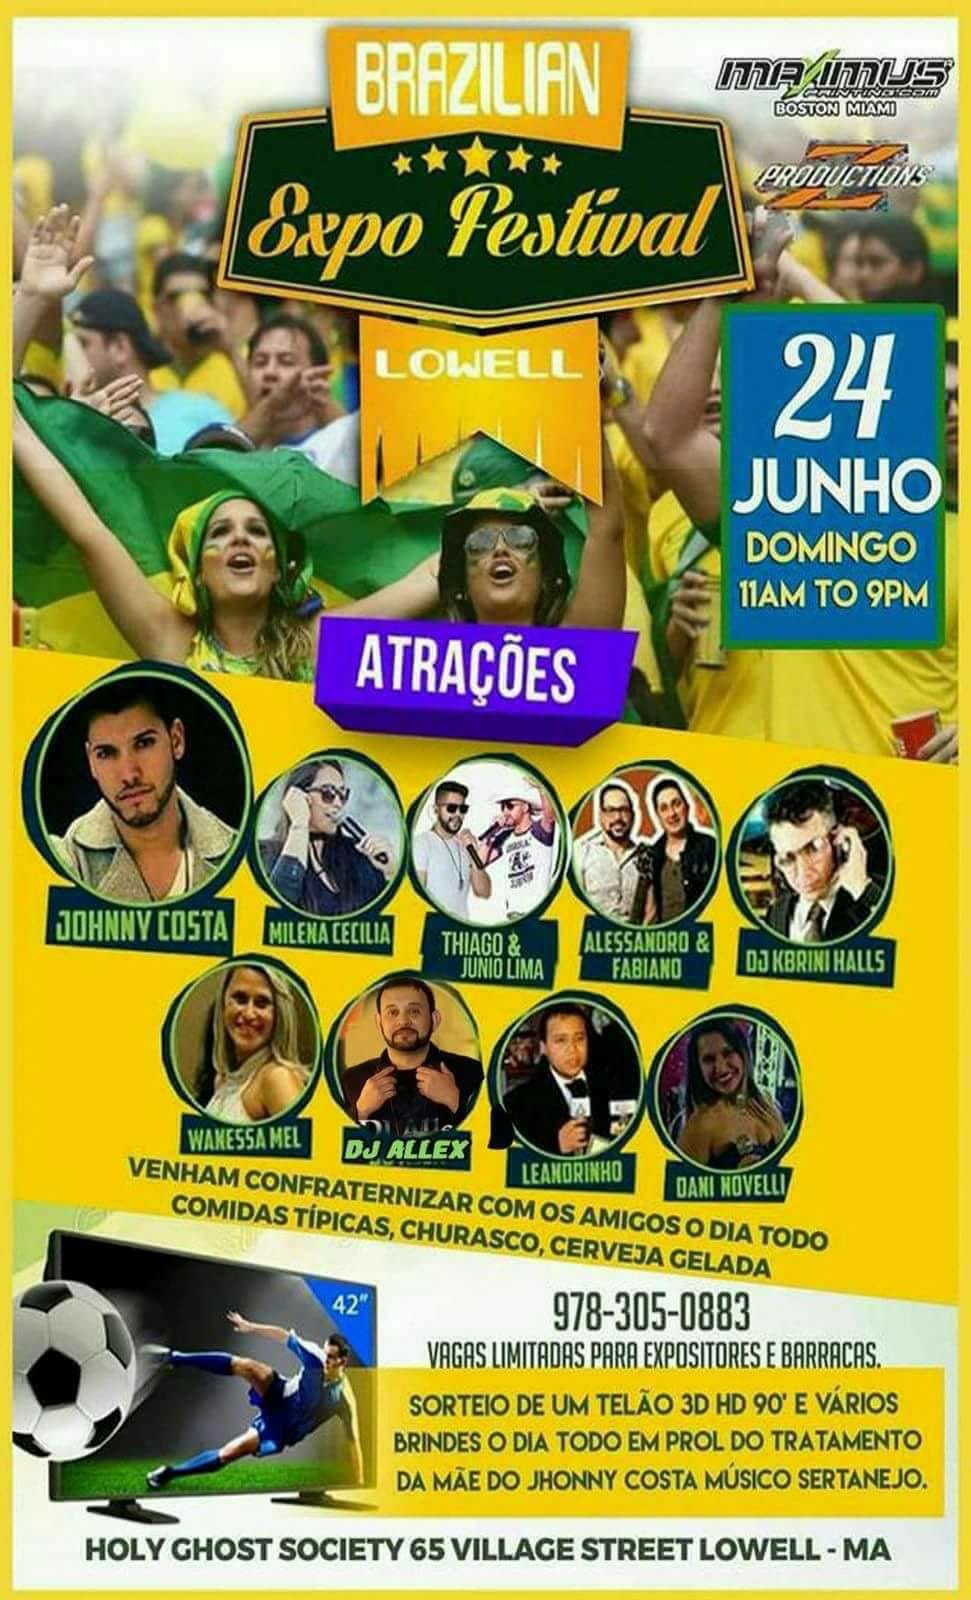 BRAZILIAN EXPO FESTIVAL